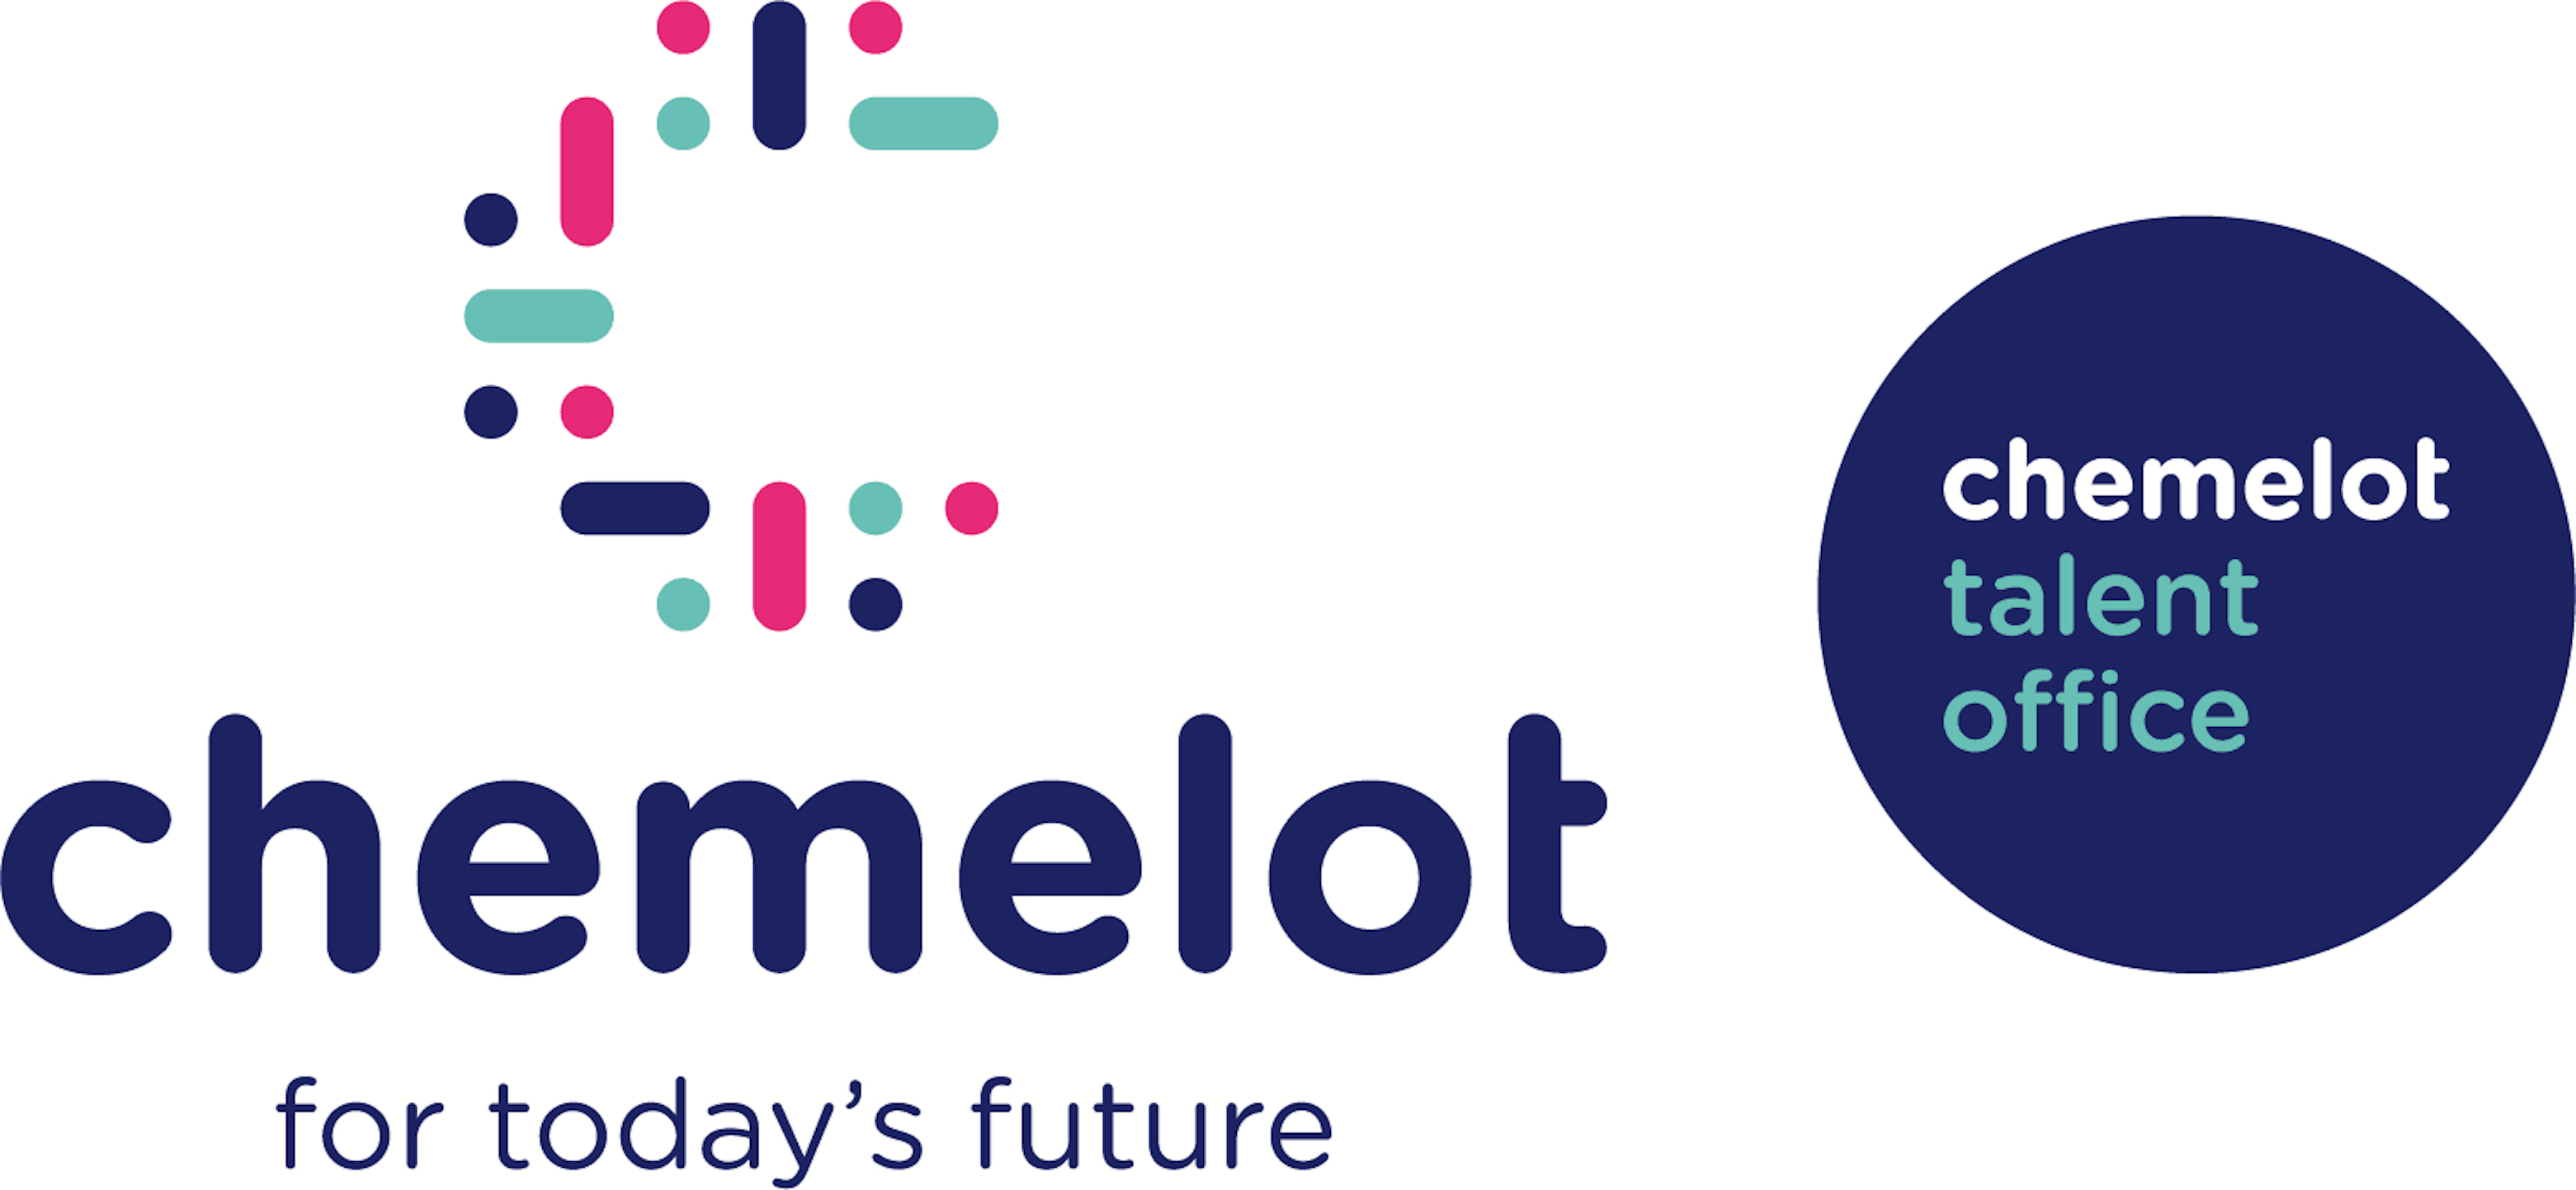 Chemelot Talent Office logo